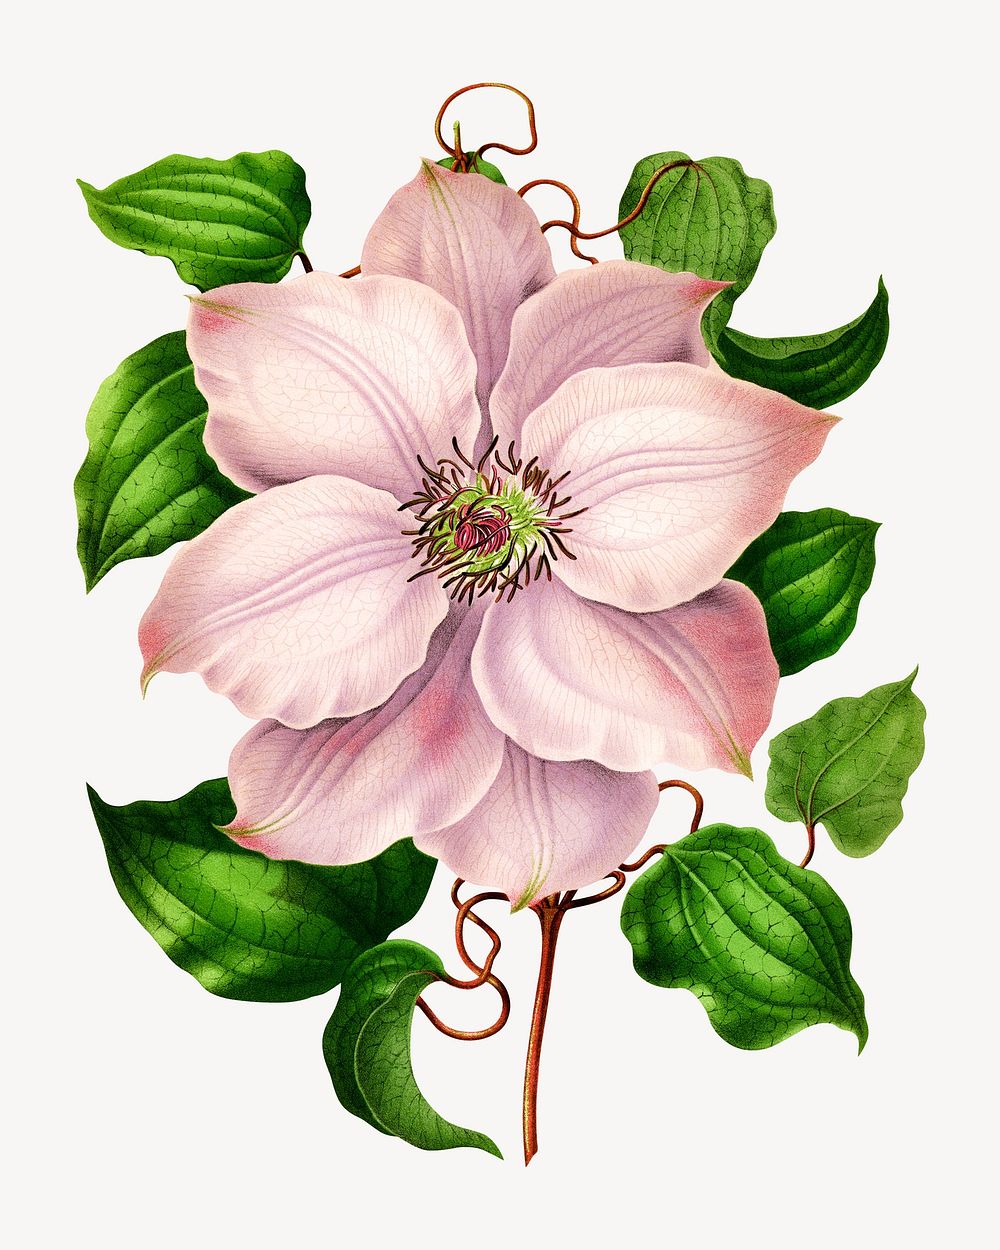 Vintage pink clematis flower illustration. Remixed from our own original 1879 edition of Nederlandsche Flora en Pomona. 